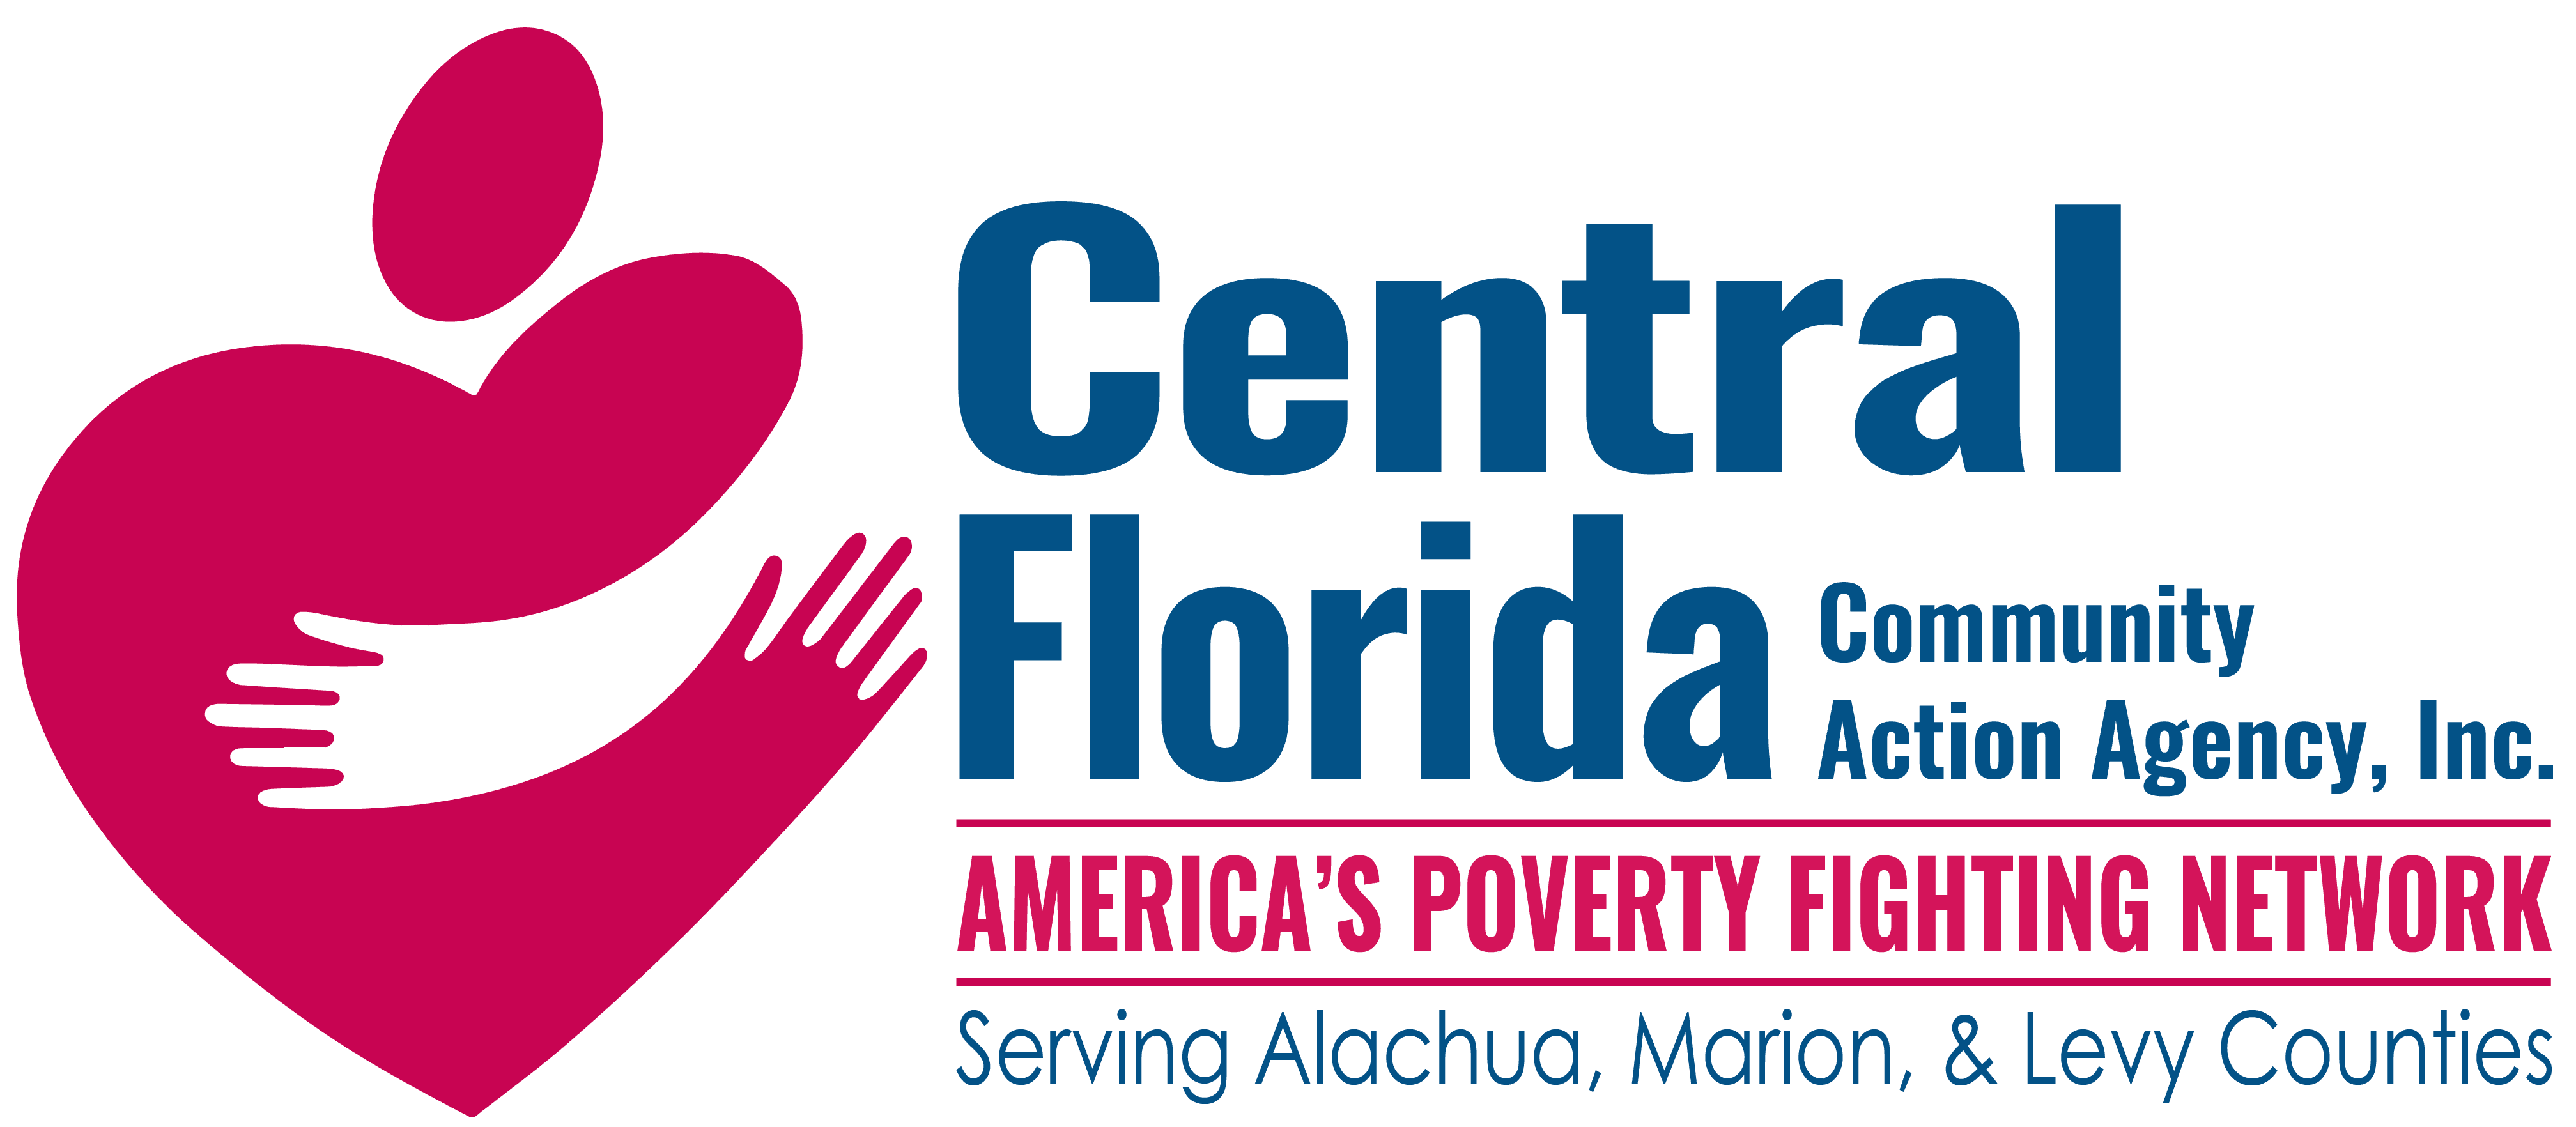 Alachua County - Central Florida Community Action Agency logo